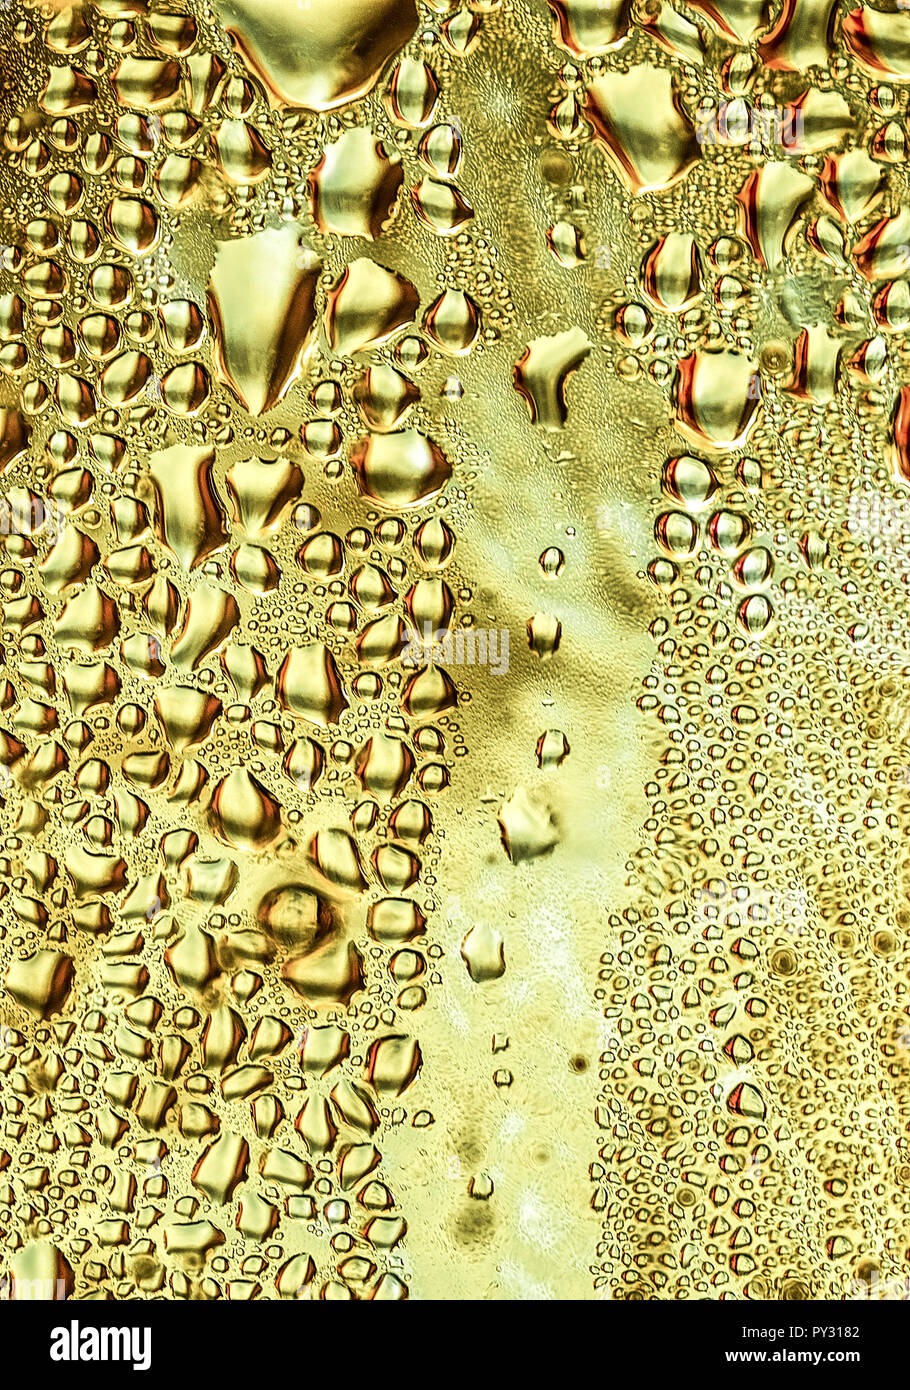 Farbige Wassertropfen, Makroaufnahme Stock Photo